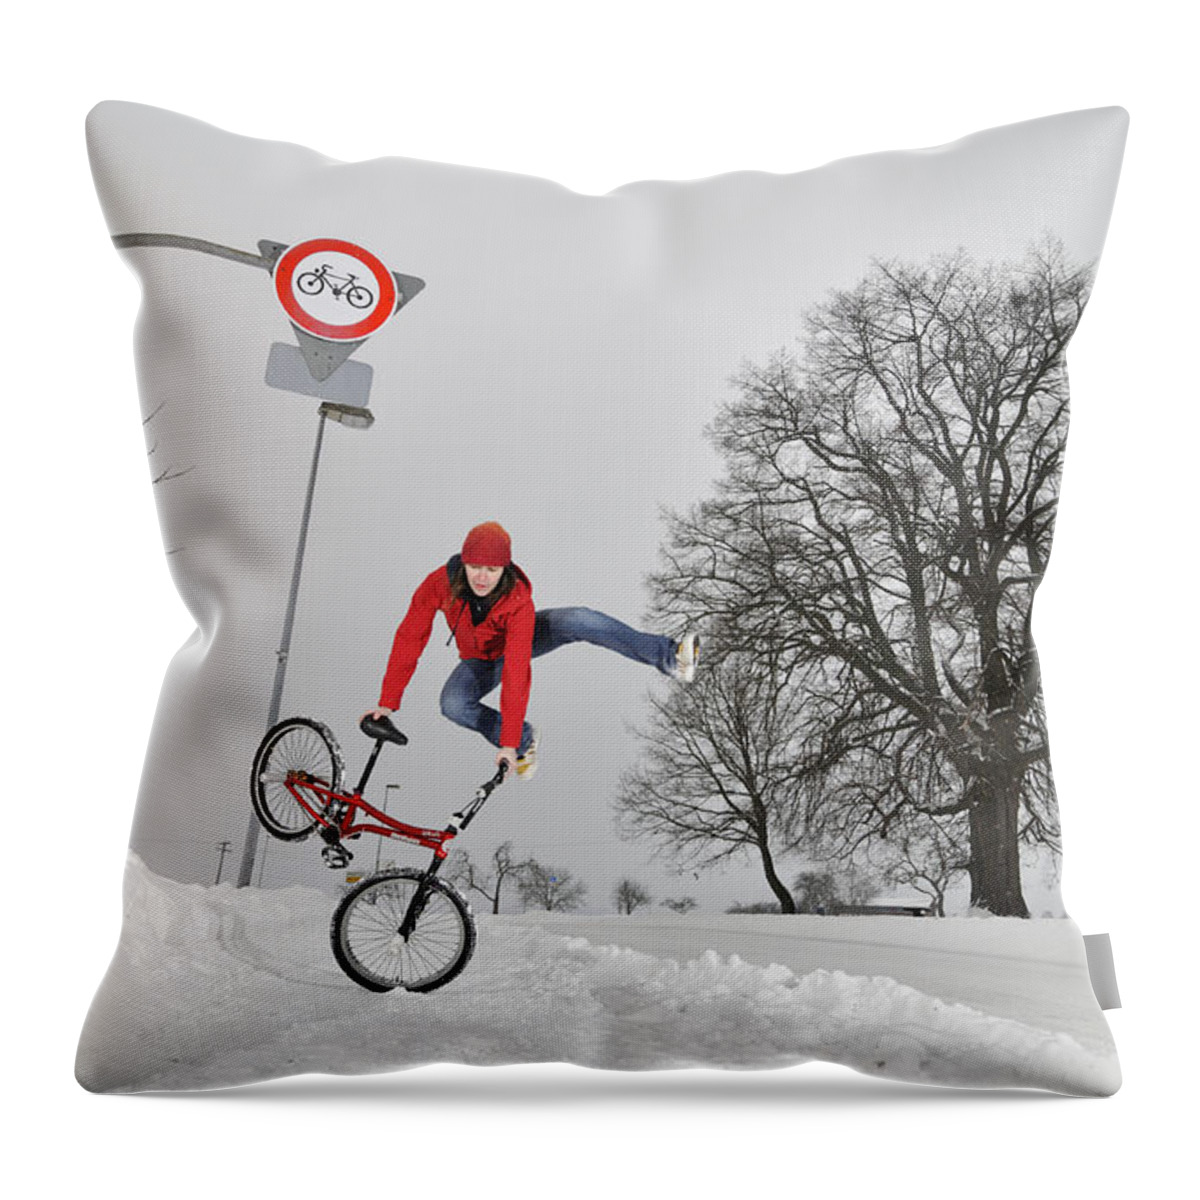 Bmx Flatland Throw Pillow featuring the photograph BMX Flatland in the snow - Monika Hinz jumping by Matthias Hauser